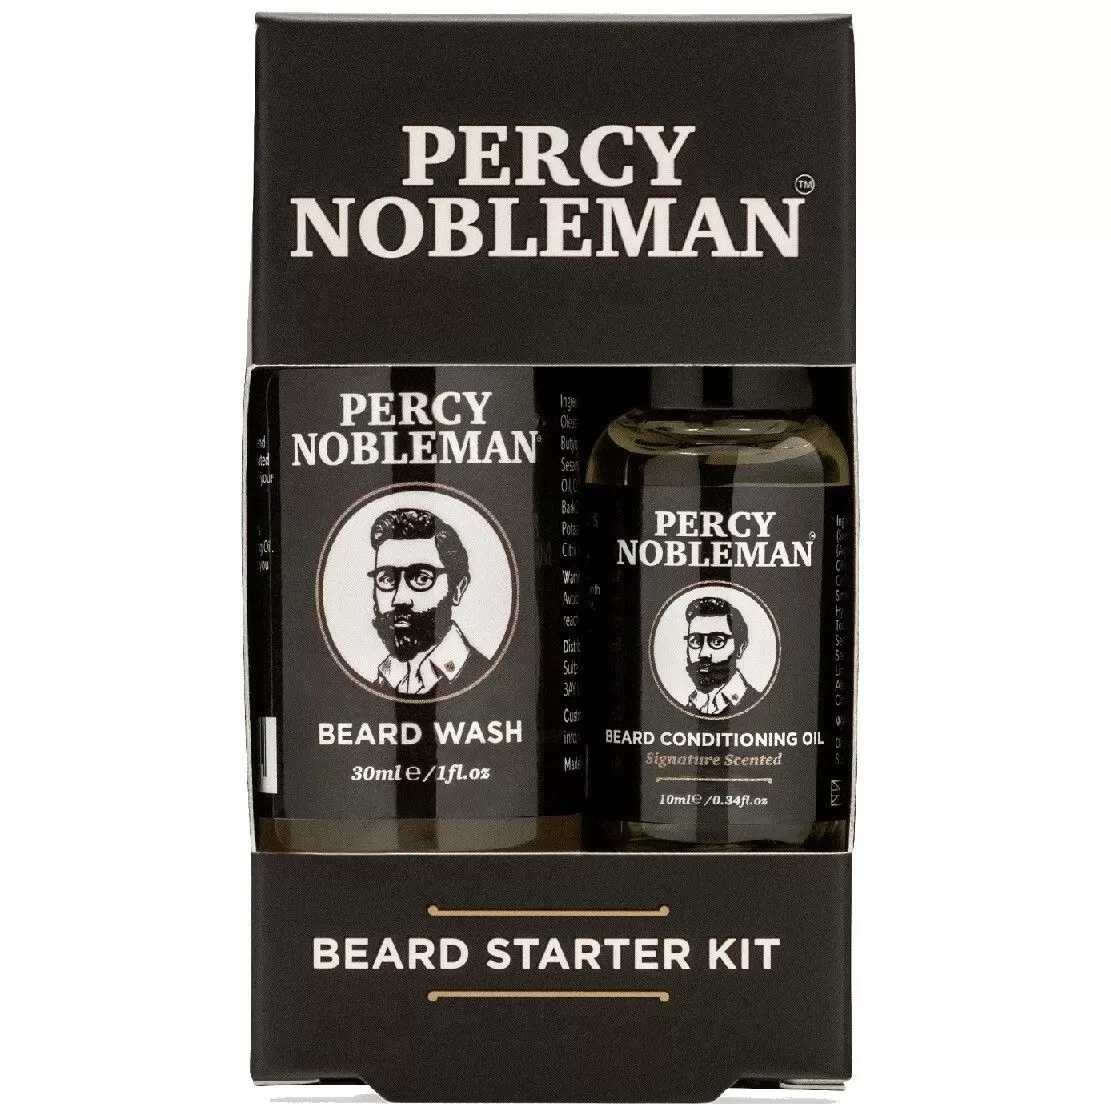 Percy Nobleman Beard Starter Kit - Пробный набор для бороды